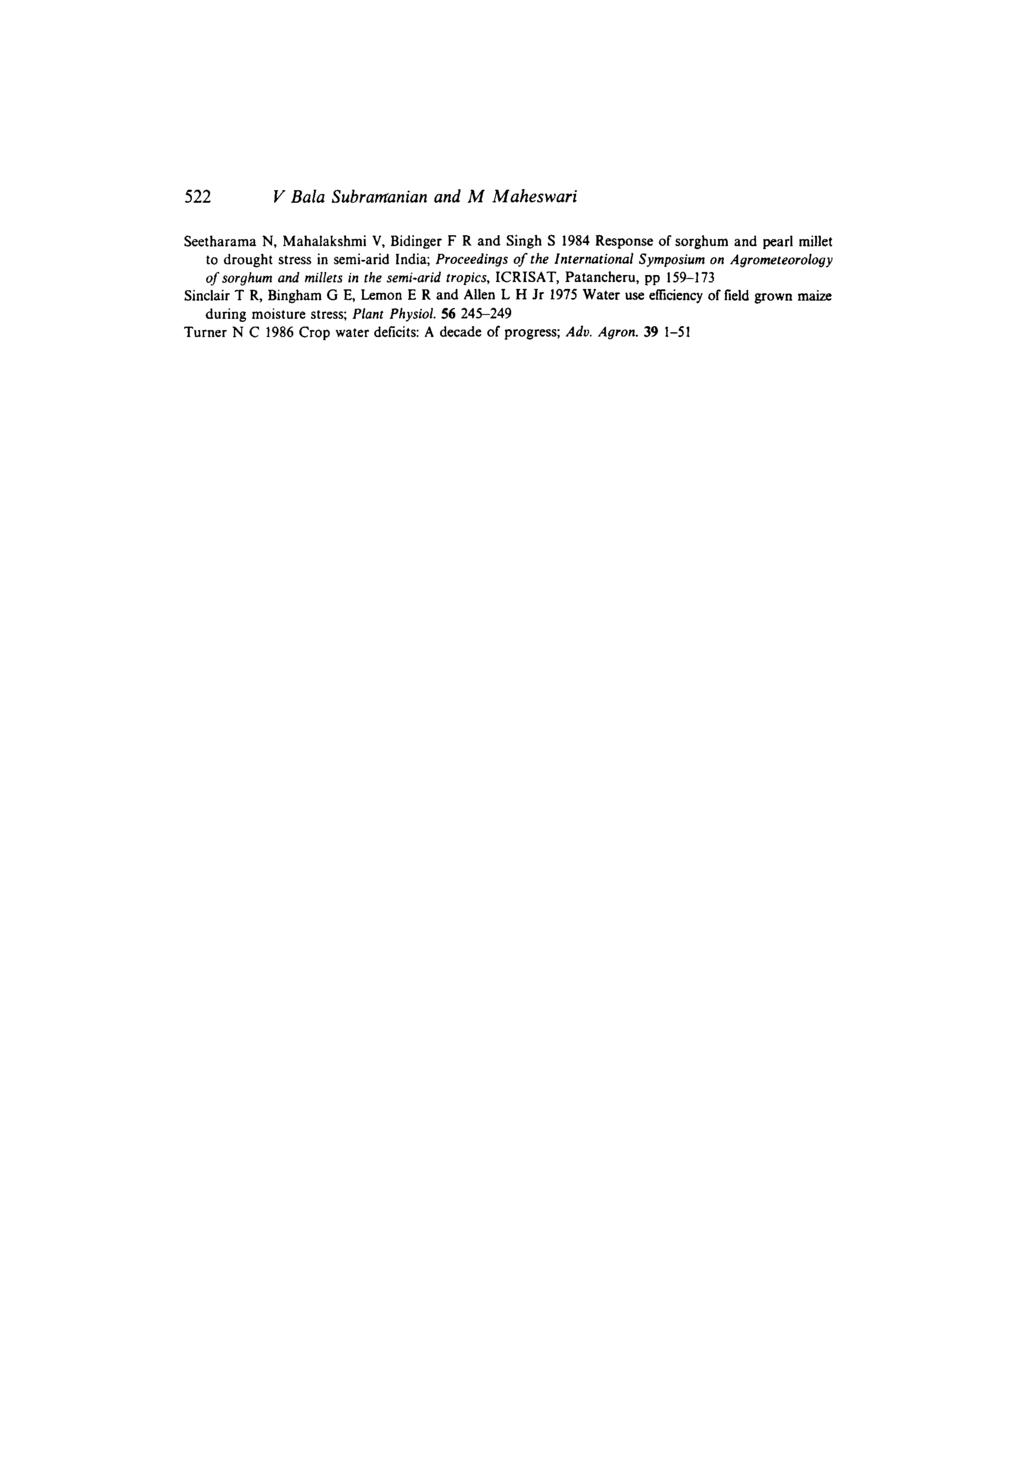 522 V Bala Subramanian and M Maheswari Seetharama N, Mahalakshmi V, Bidinger F R and Singh S 1984 Response of sorghum and pearl millet to drought stress in semi-arid India; Proceedings of the